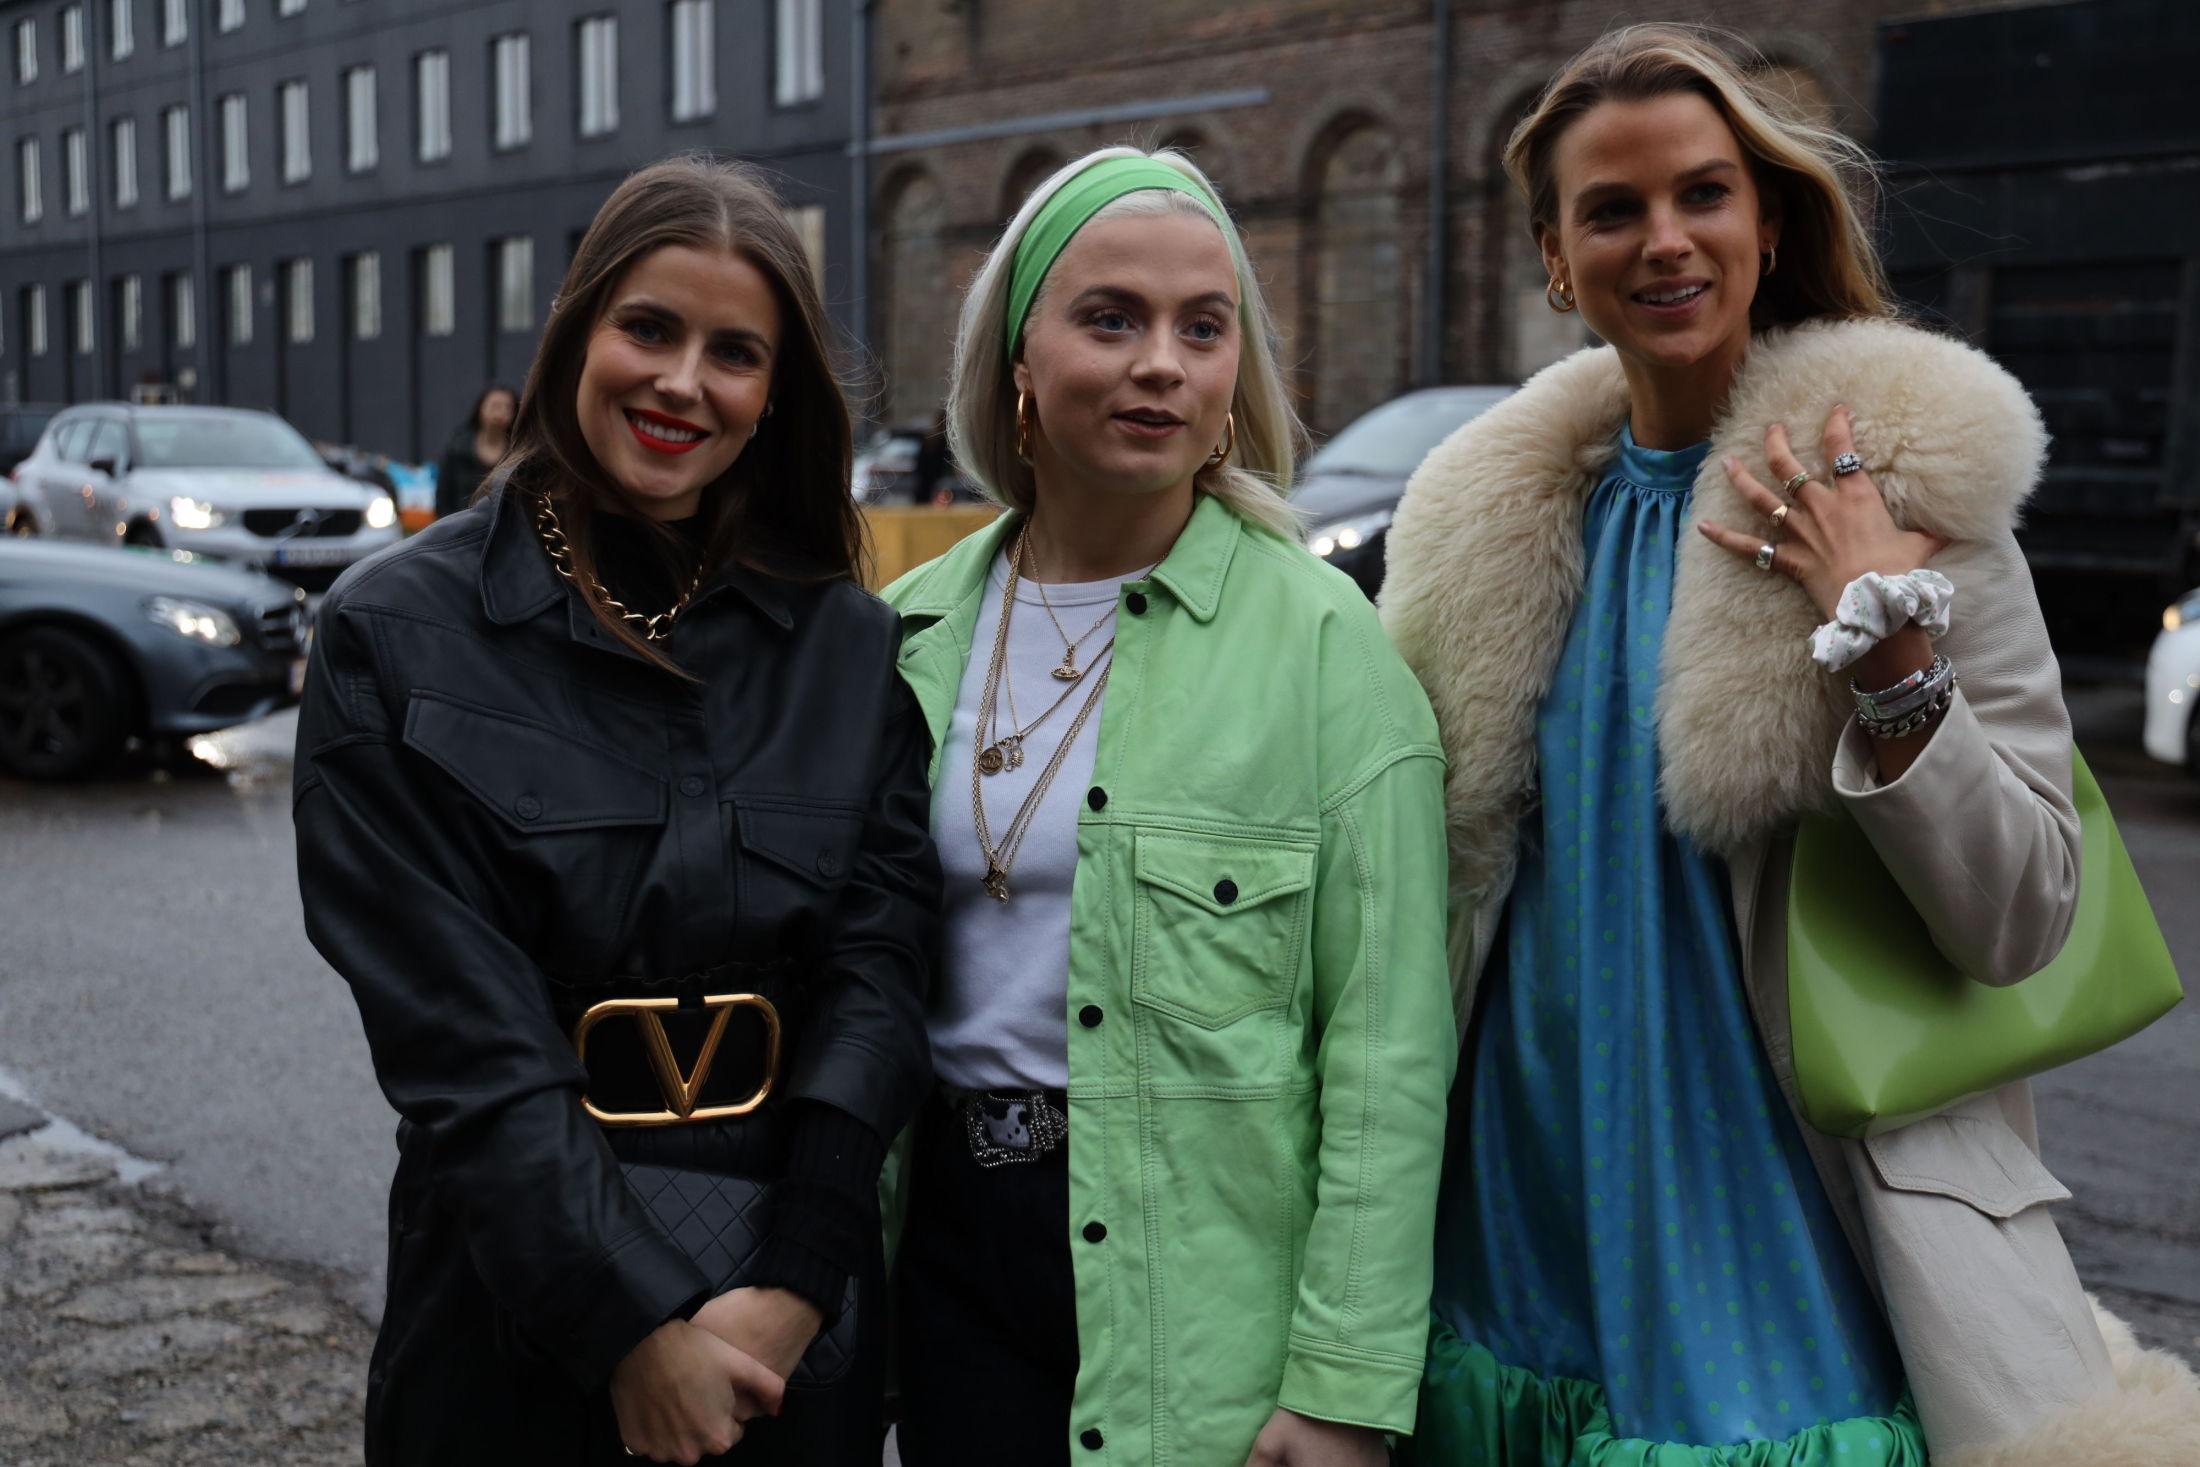 FIN TRIO: Nina Sandbech, Ida Broen og en venninne ankom Stine Goya sammen. Foto: MinMote.